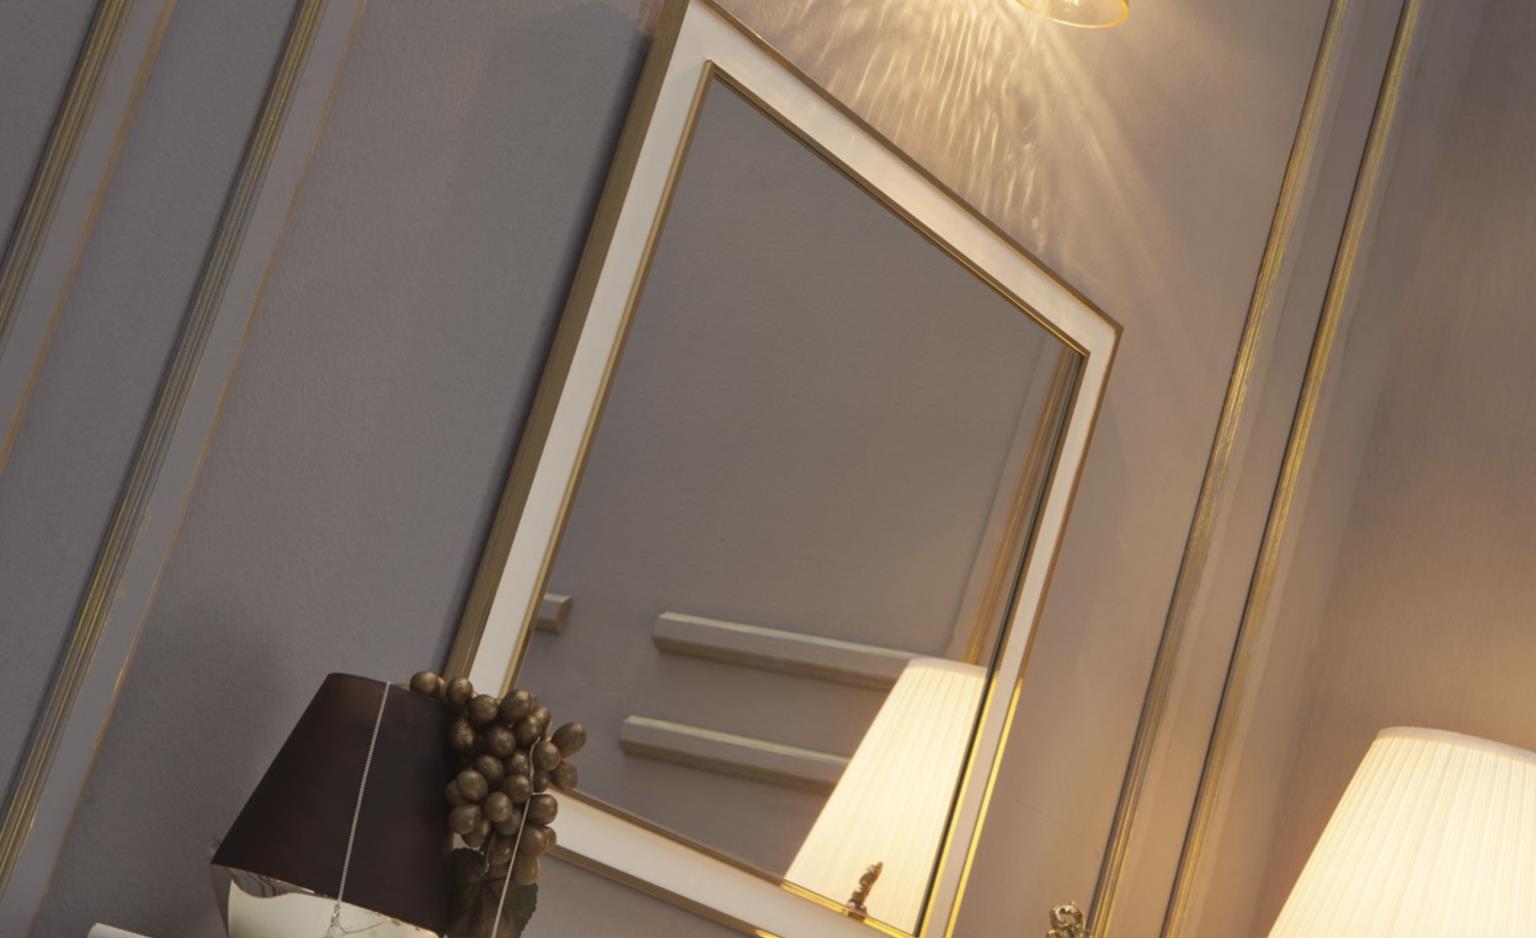 Mistral Dresser Mirror - Home Store Furniture